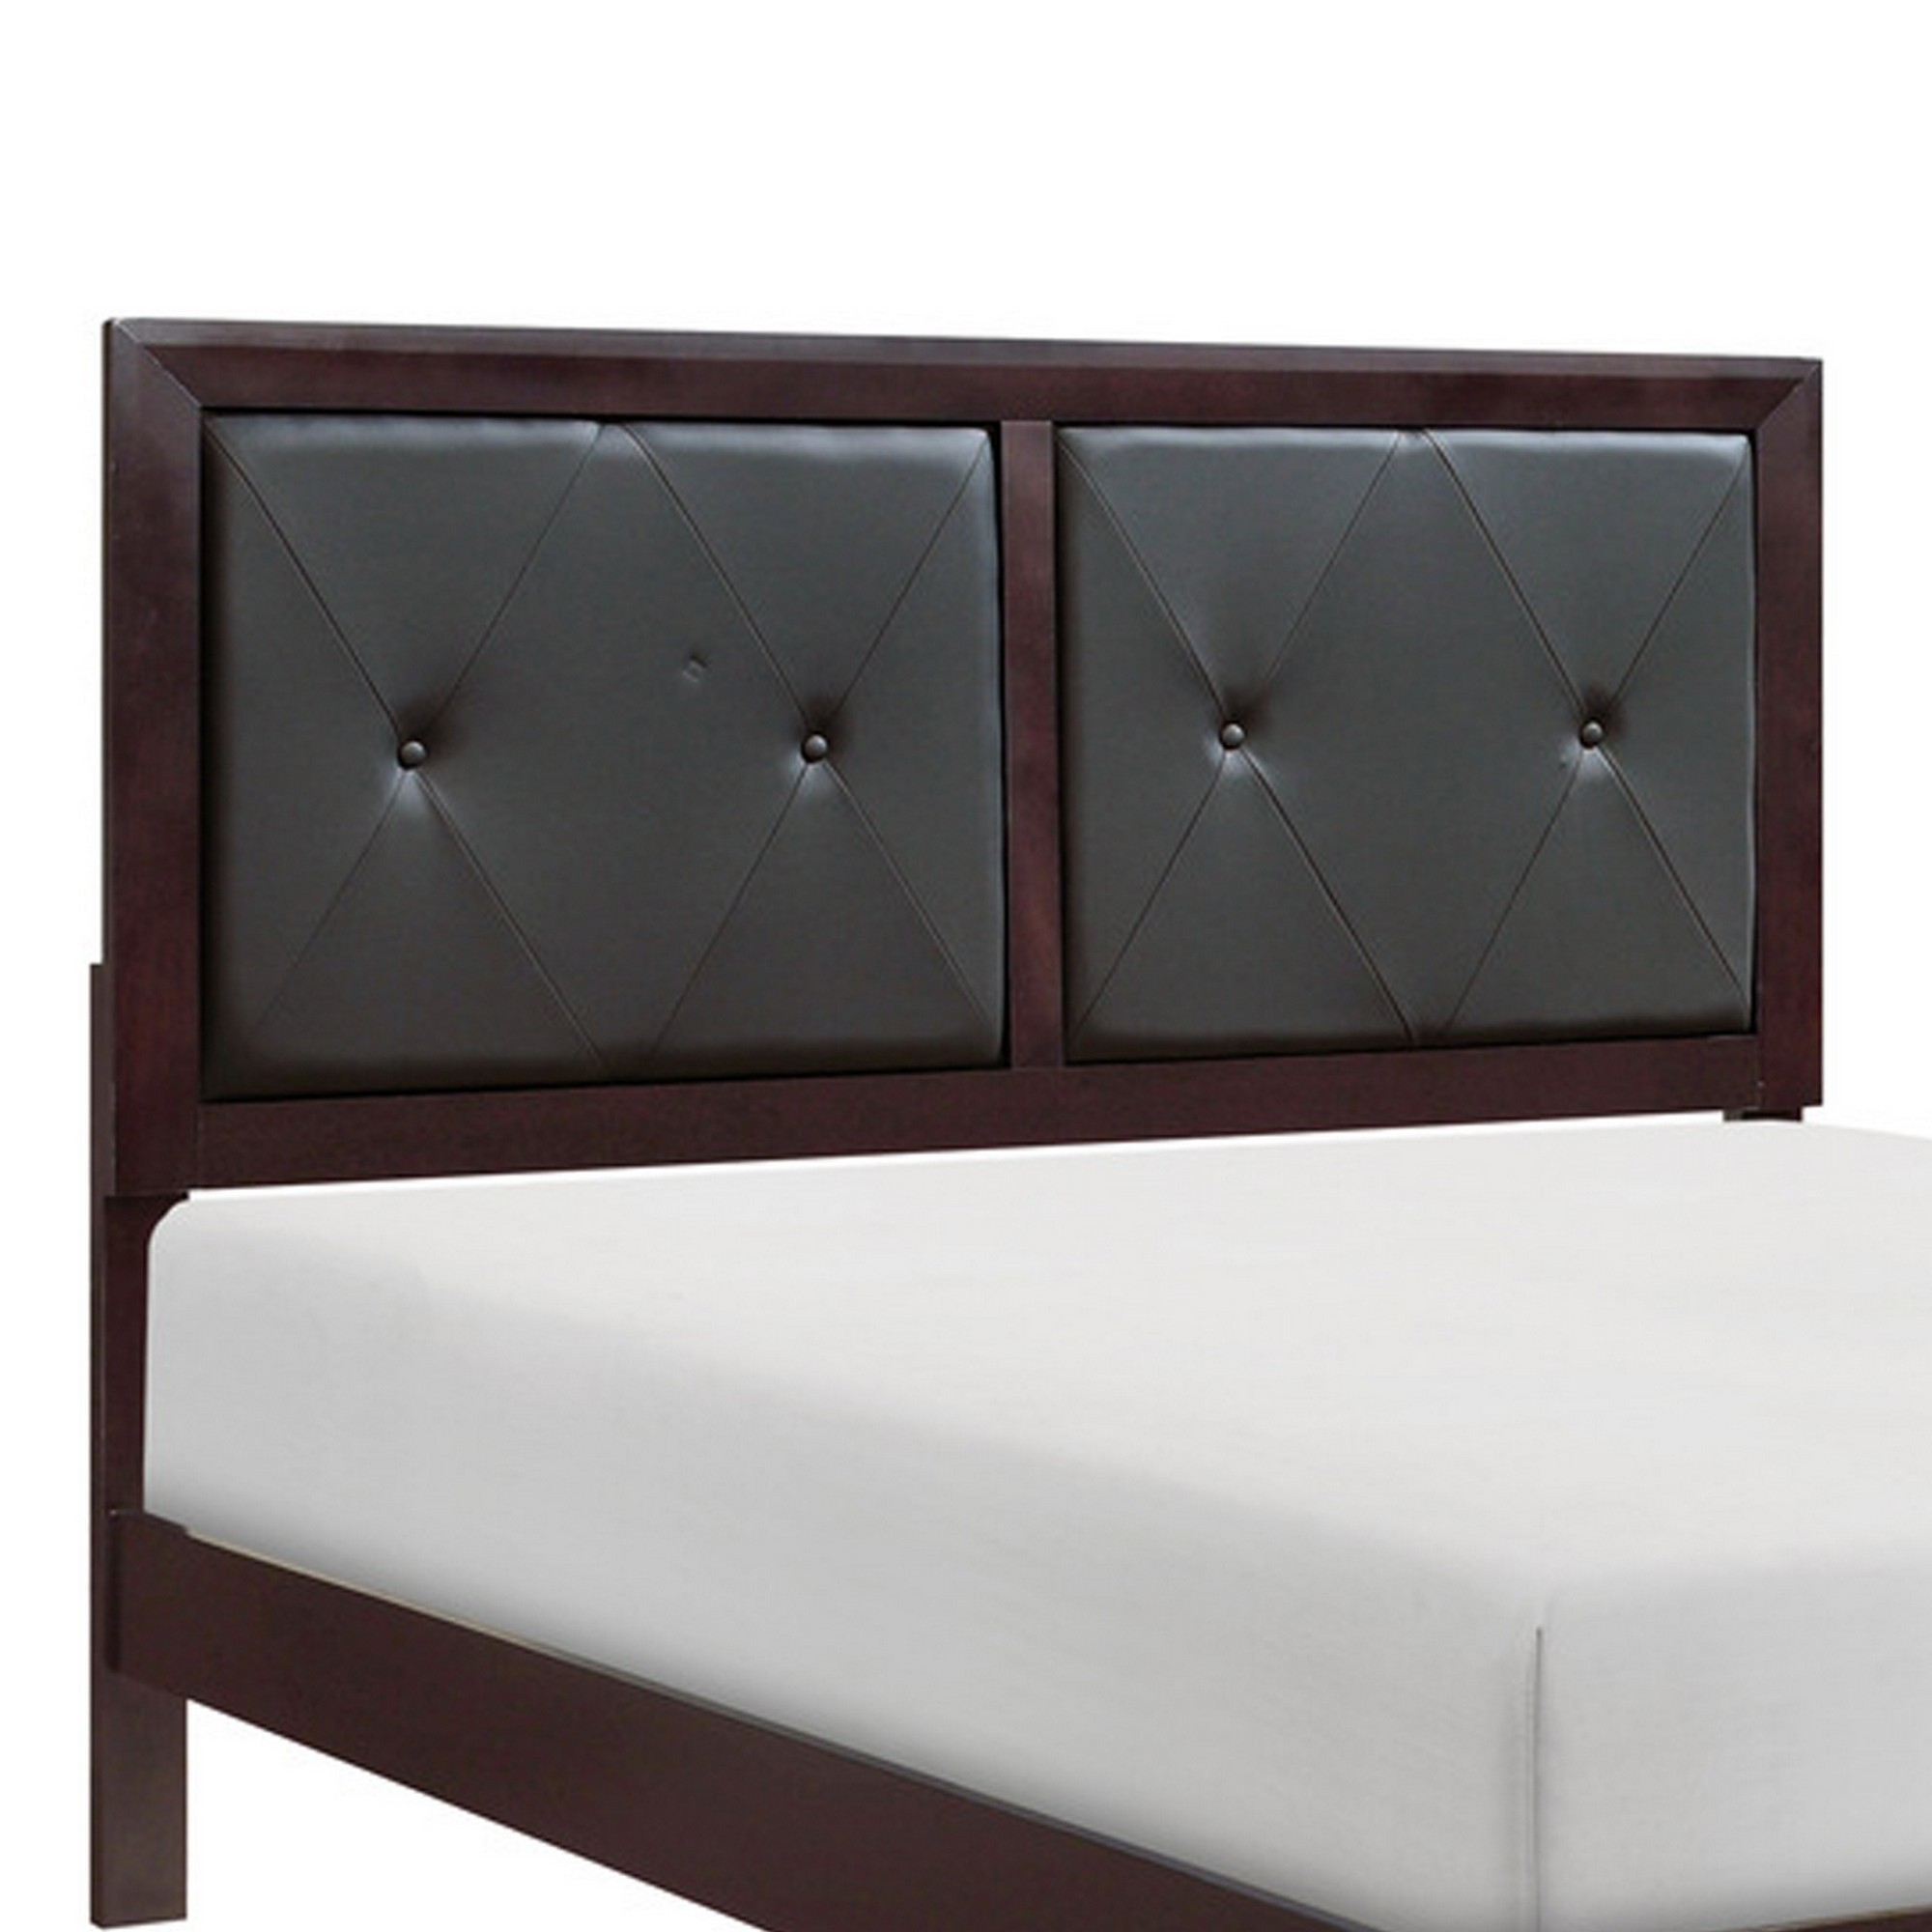 Wade Contemporary Queen Bed, Faux Leather Tufted Headboard, Espresso Brown- Saltoro Sherpi